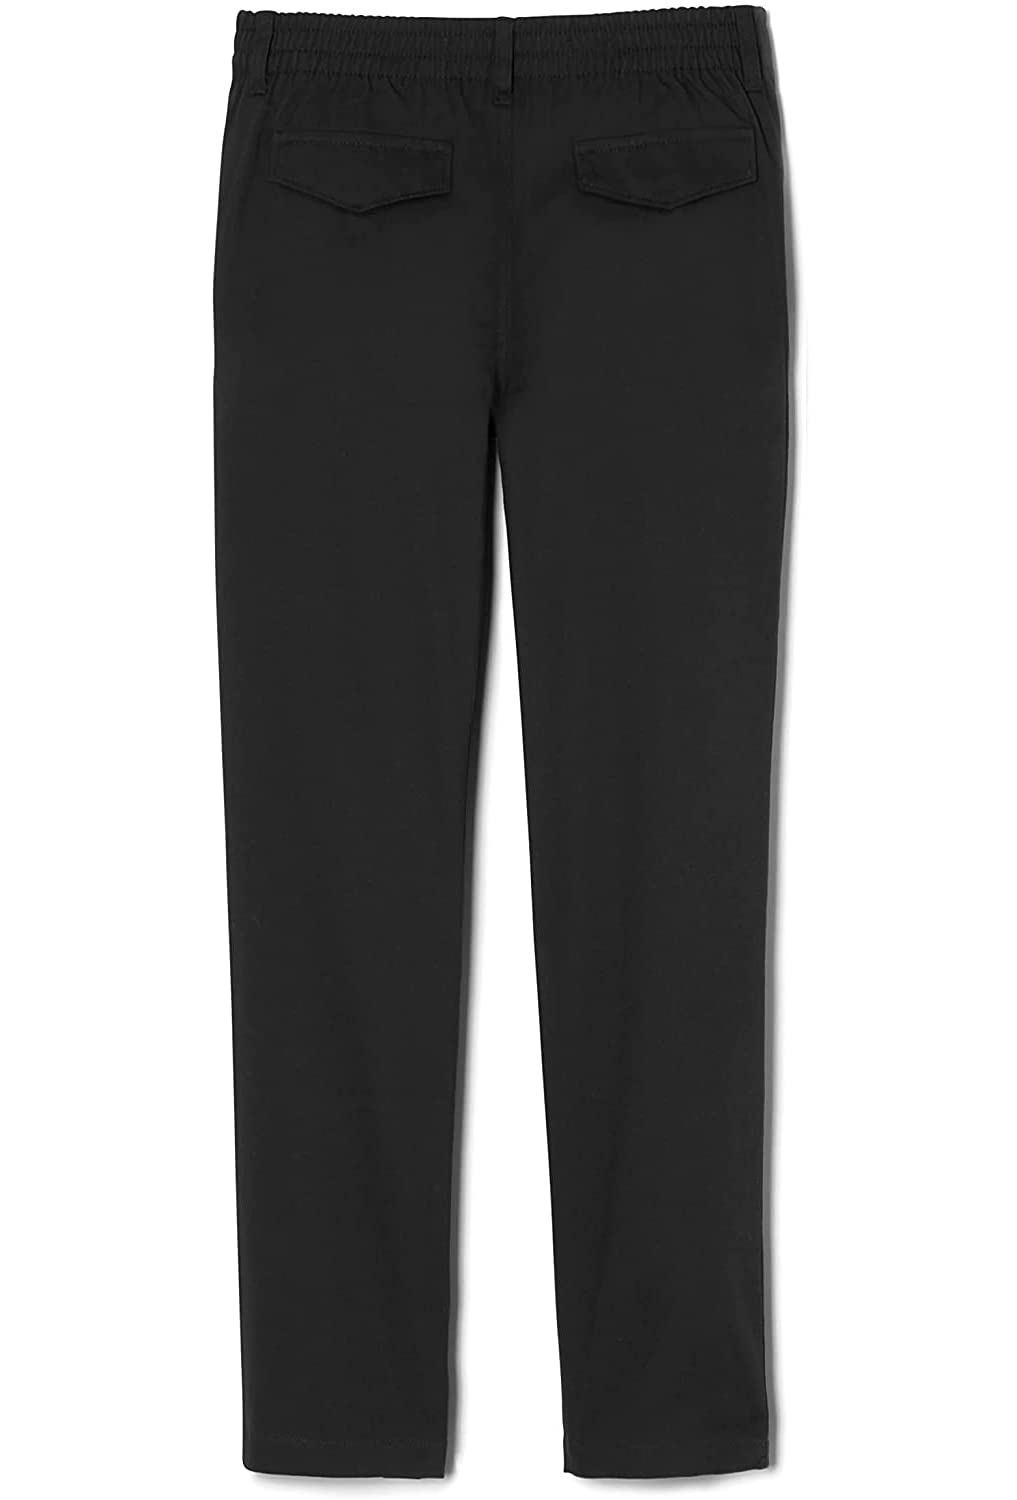 French Toast girls Pull-on Twill (Standard & Plus) Pants, School Uniform Black, 16 US